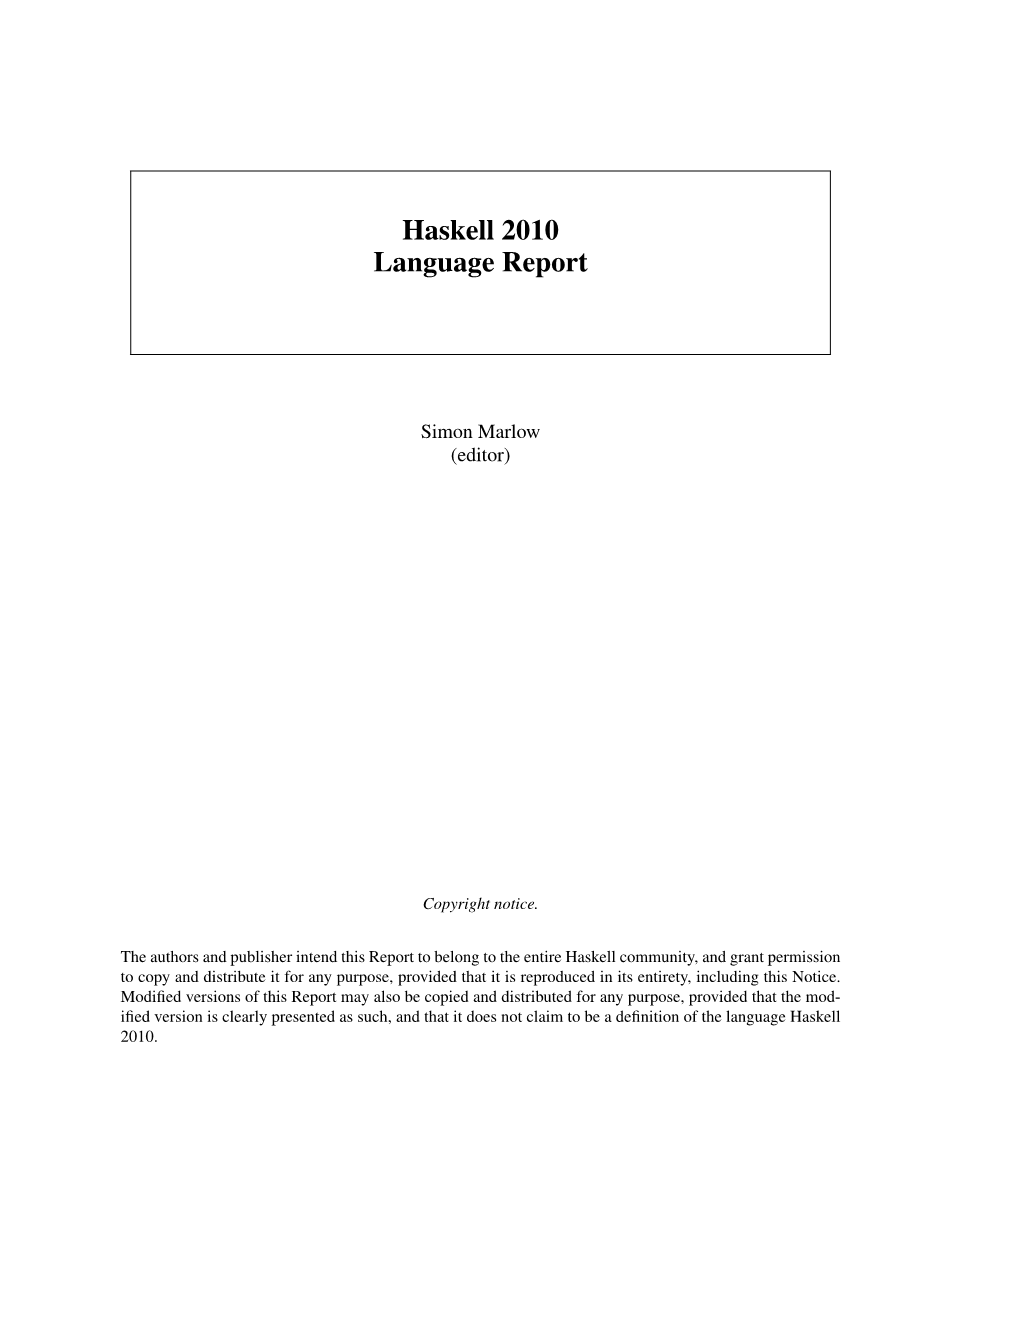 Haskell 2010 Language Report